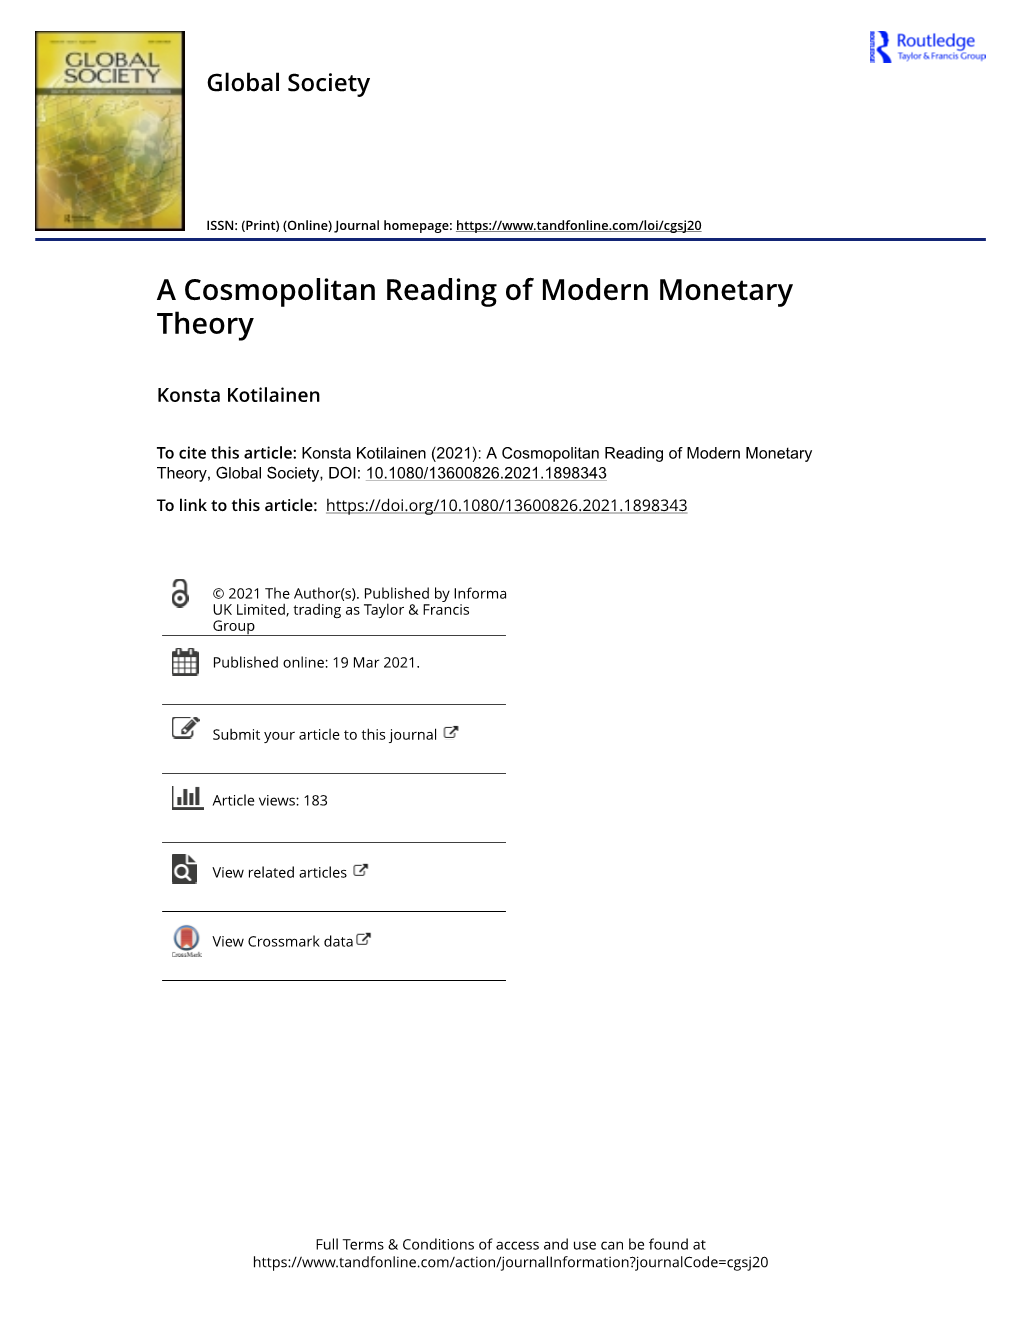 A Cosmopolitan Reading of Modern Monetary Theory